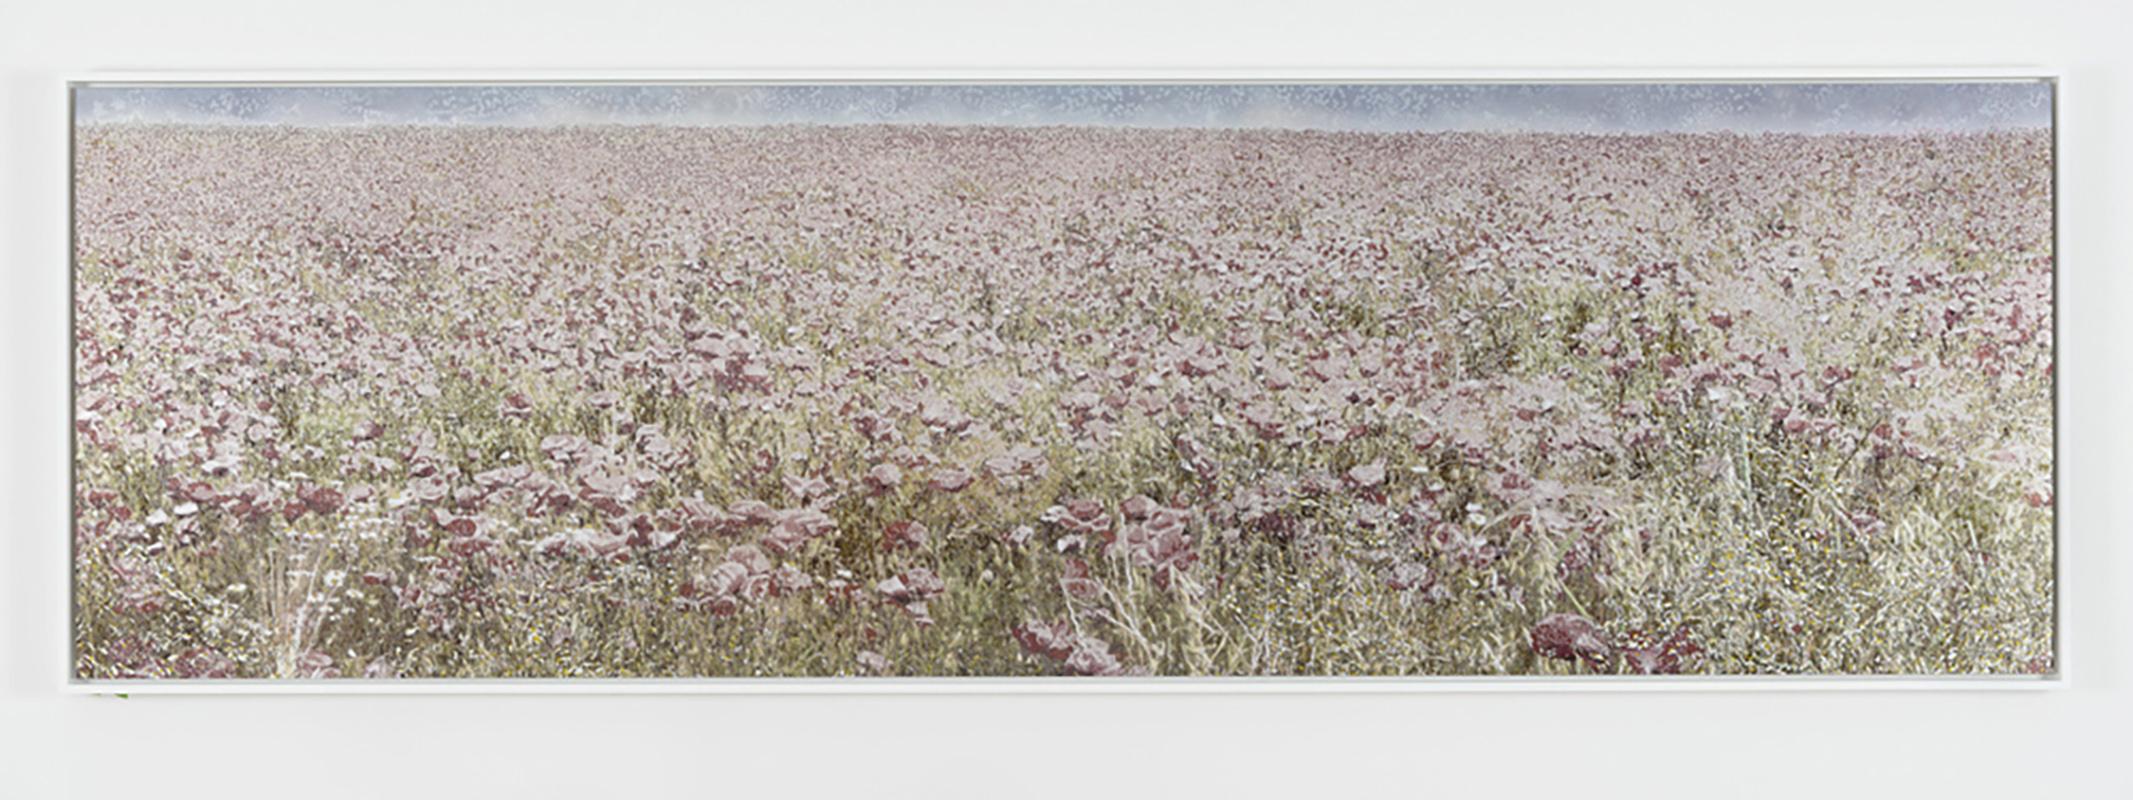 Scenapse Field 11 - landscape, photography, print, metallic paper, contemporary - Gray Landscape Print by Aziz + Cucher